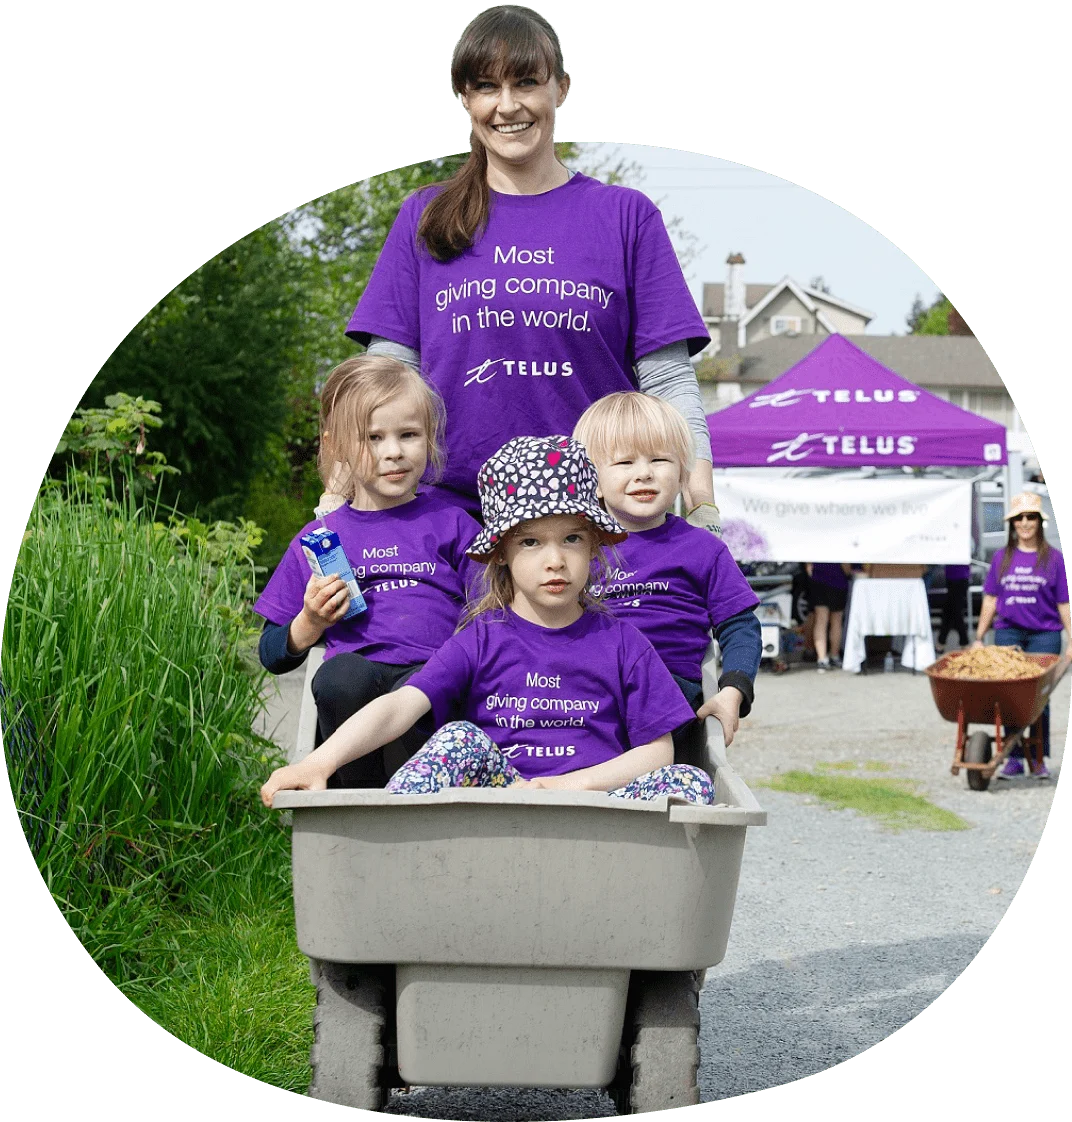 A TELUS volunteer standing behind three children seated in a wheelbarrow